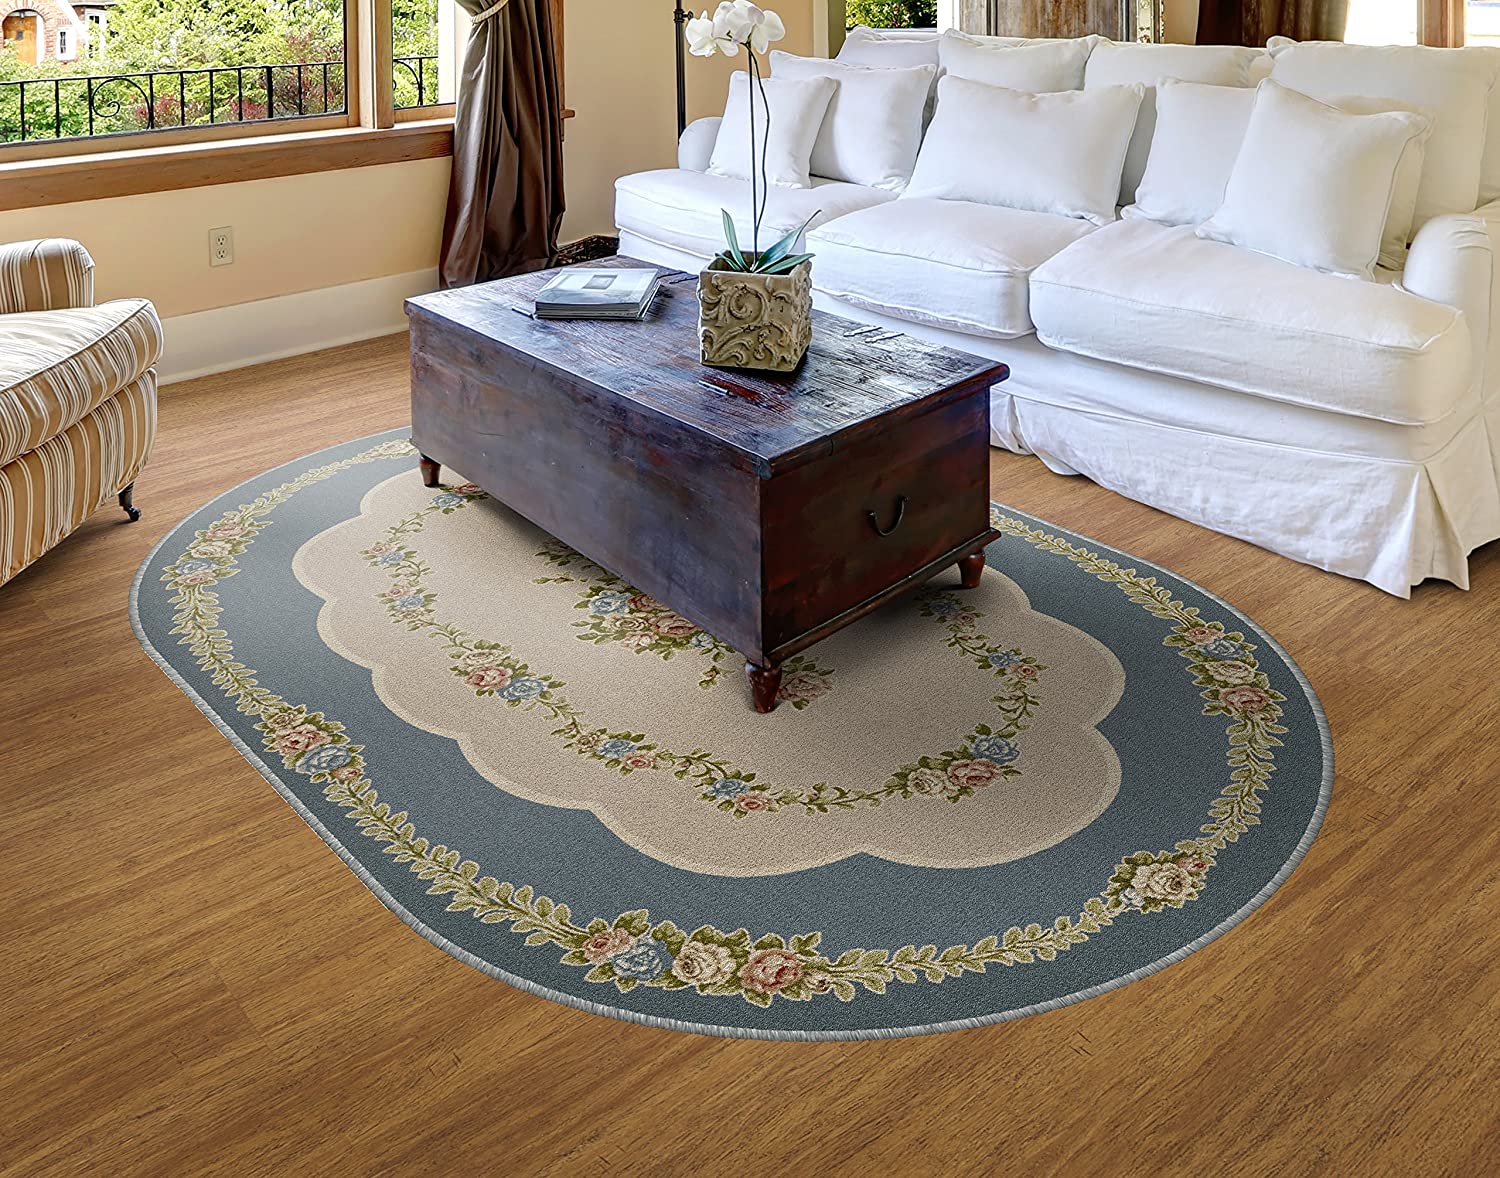 Oval Rug Living Room, Room Oval Carpet